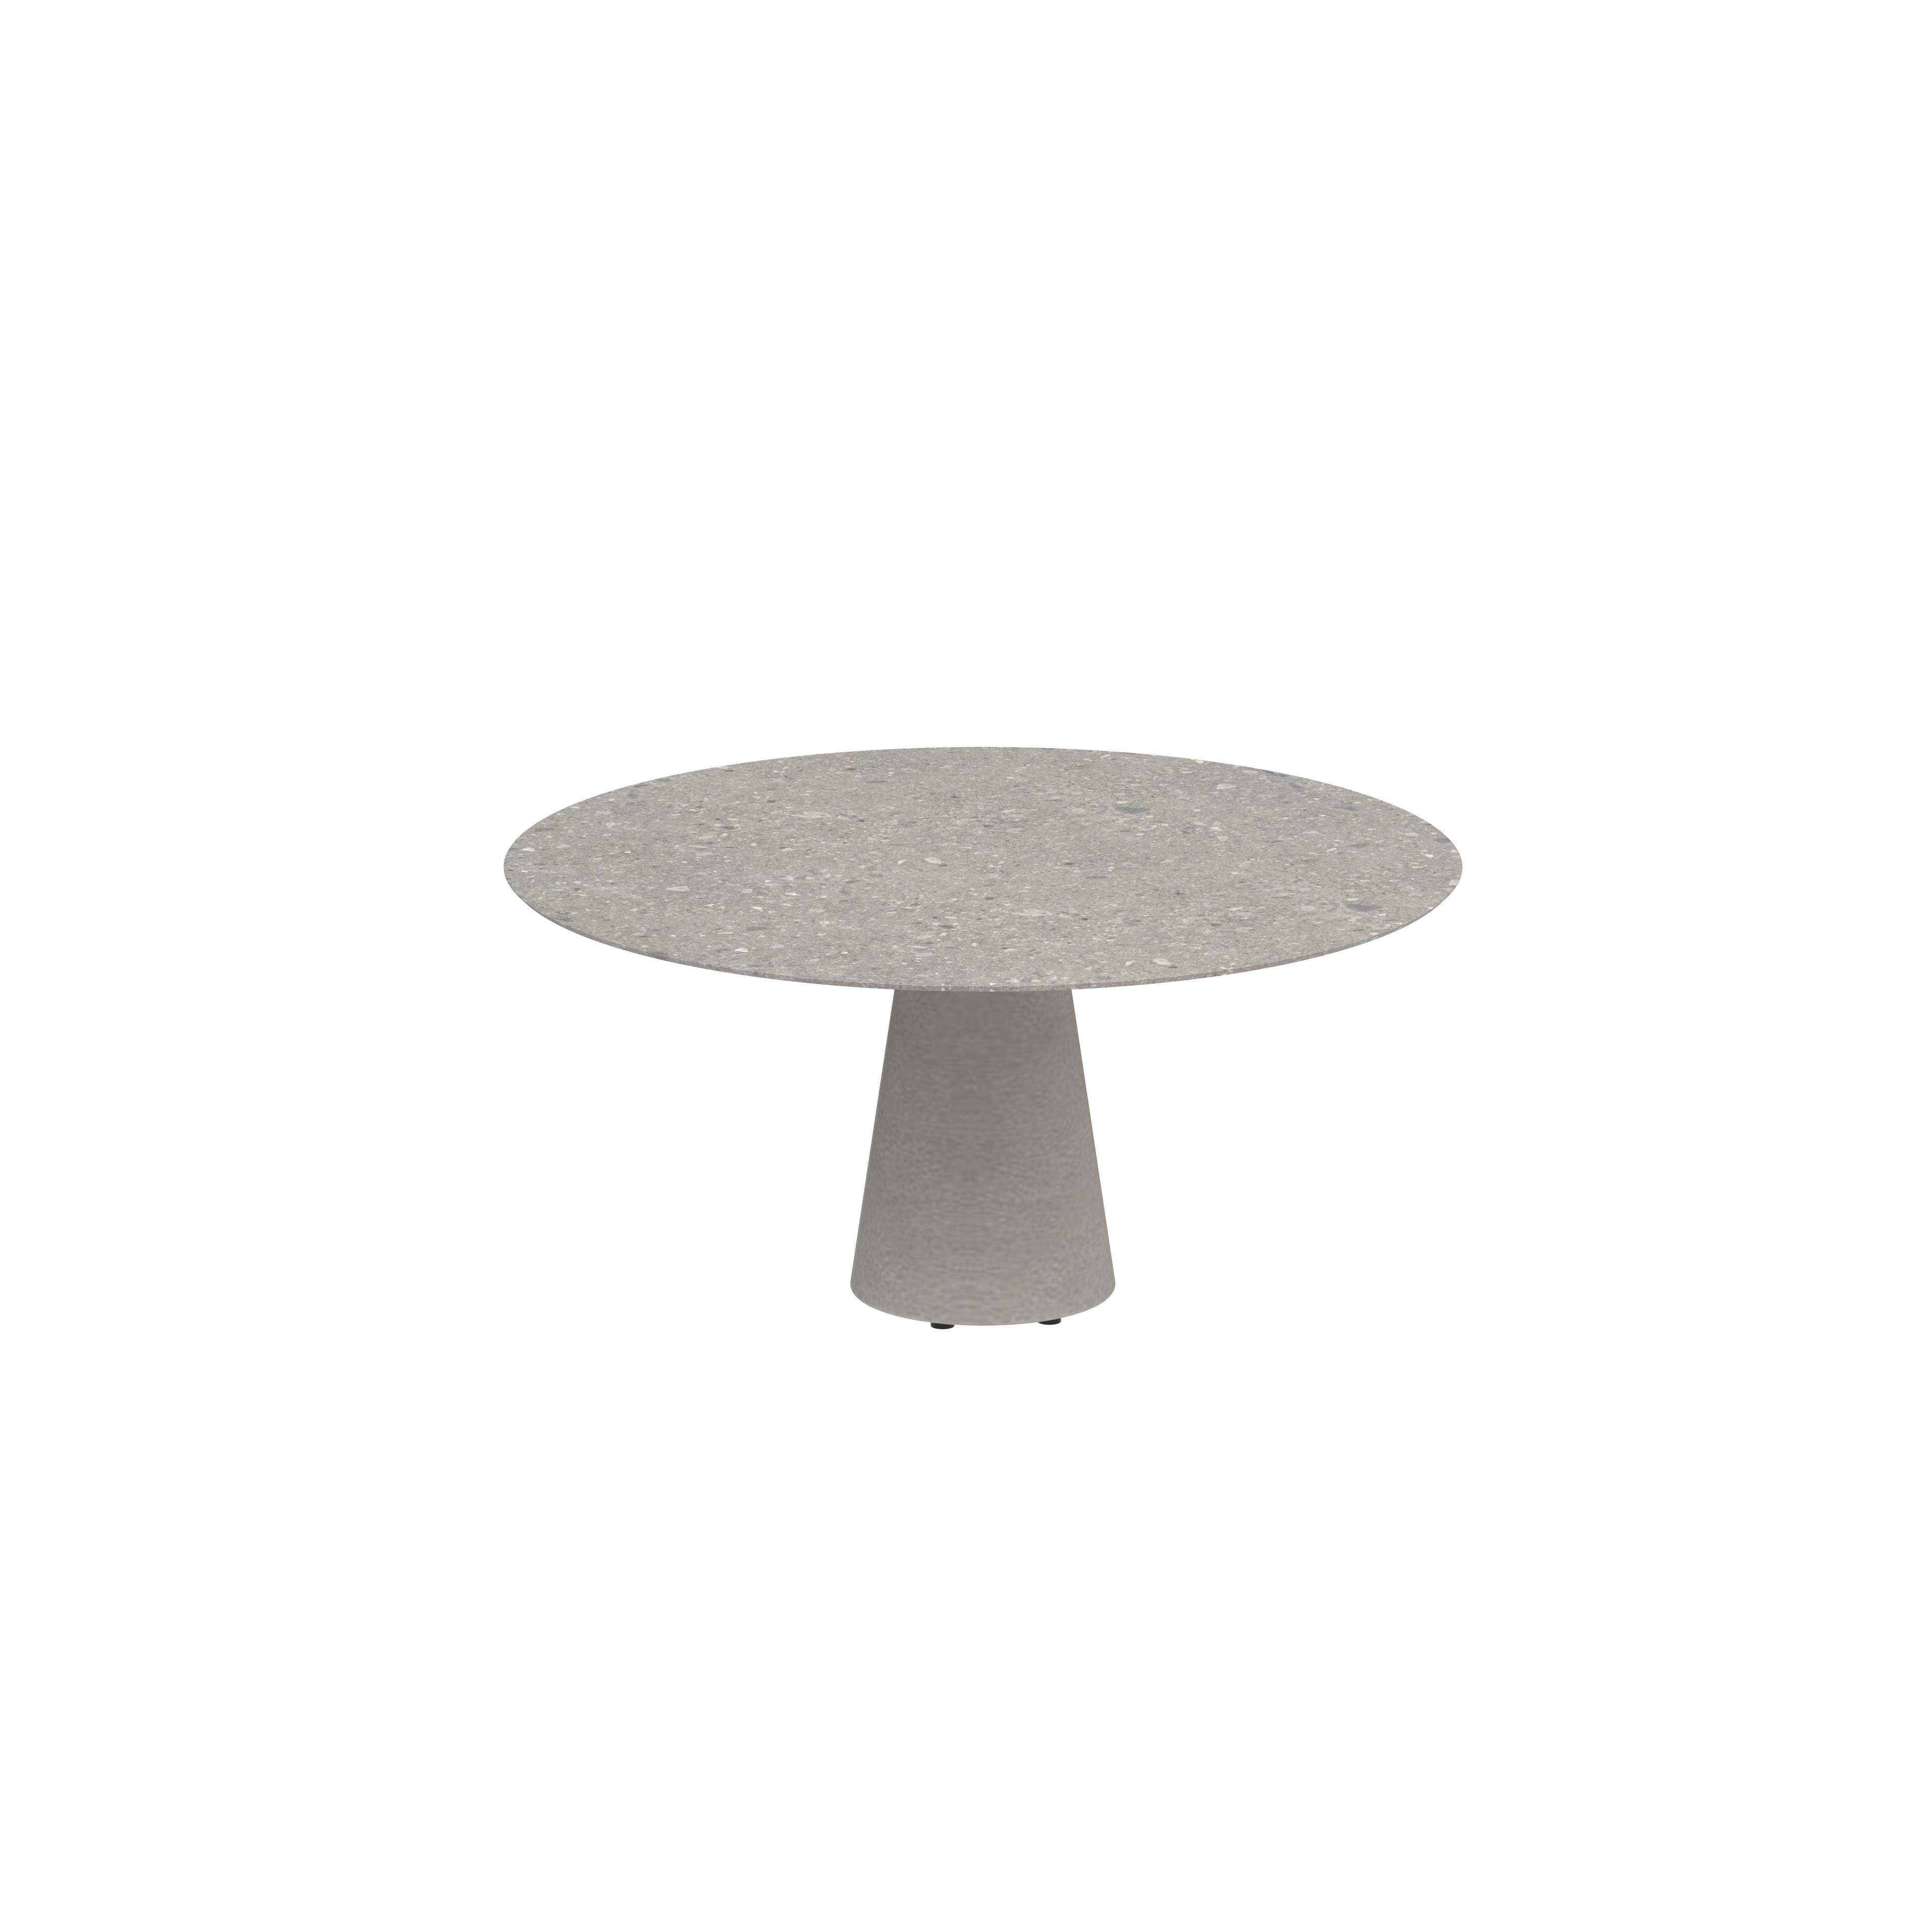 Conix Table Round Ø 160cm Legs Concrete Cement Grey - Tabletop Ceramic Ceppo Dolomitica